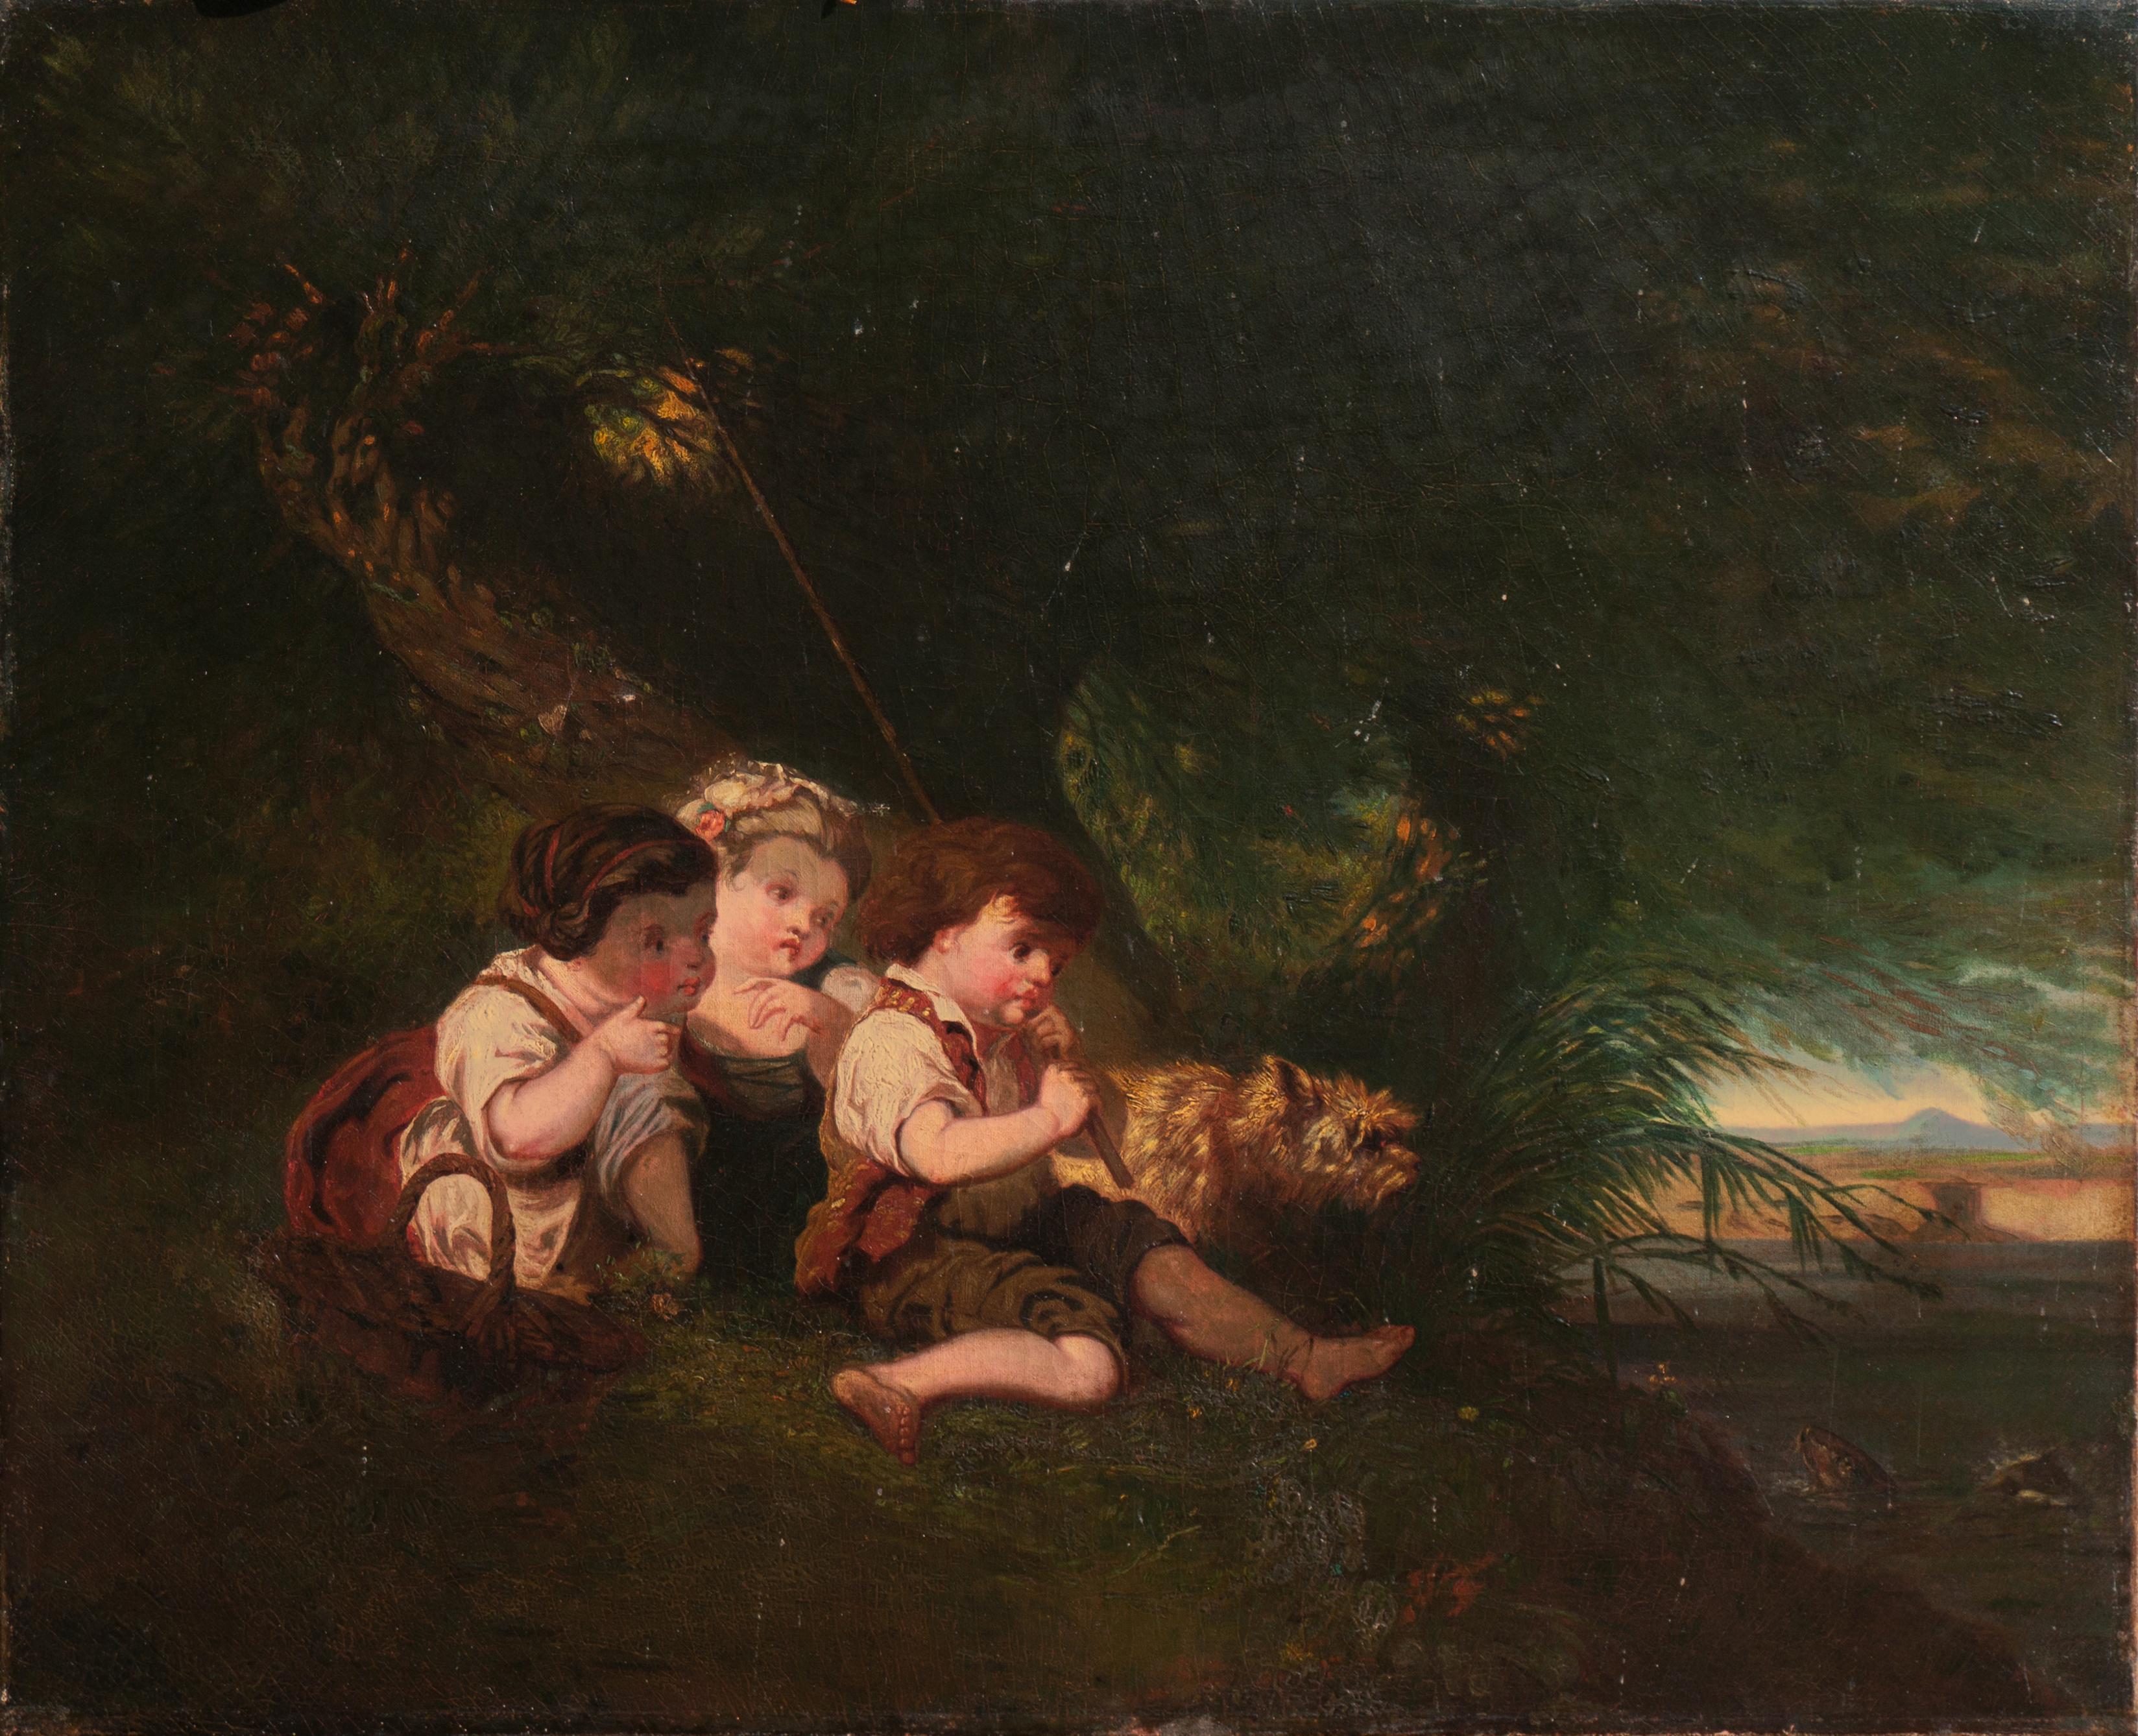 'Children Landing a Catfish', 19th Century American School, Large Nocturnal Oil